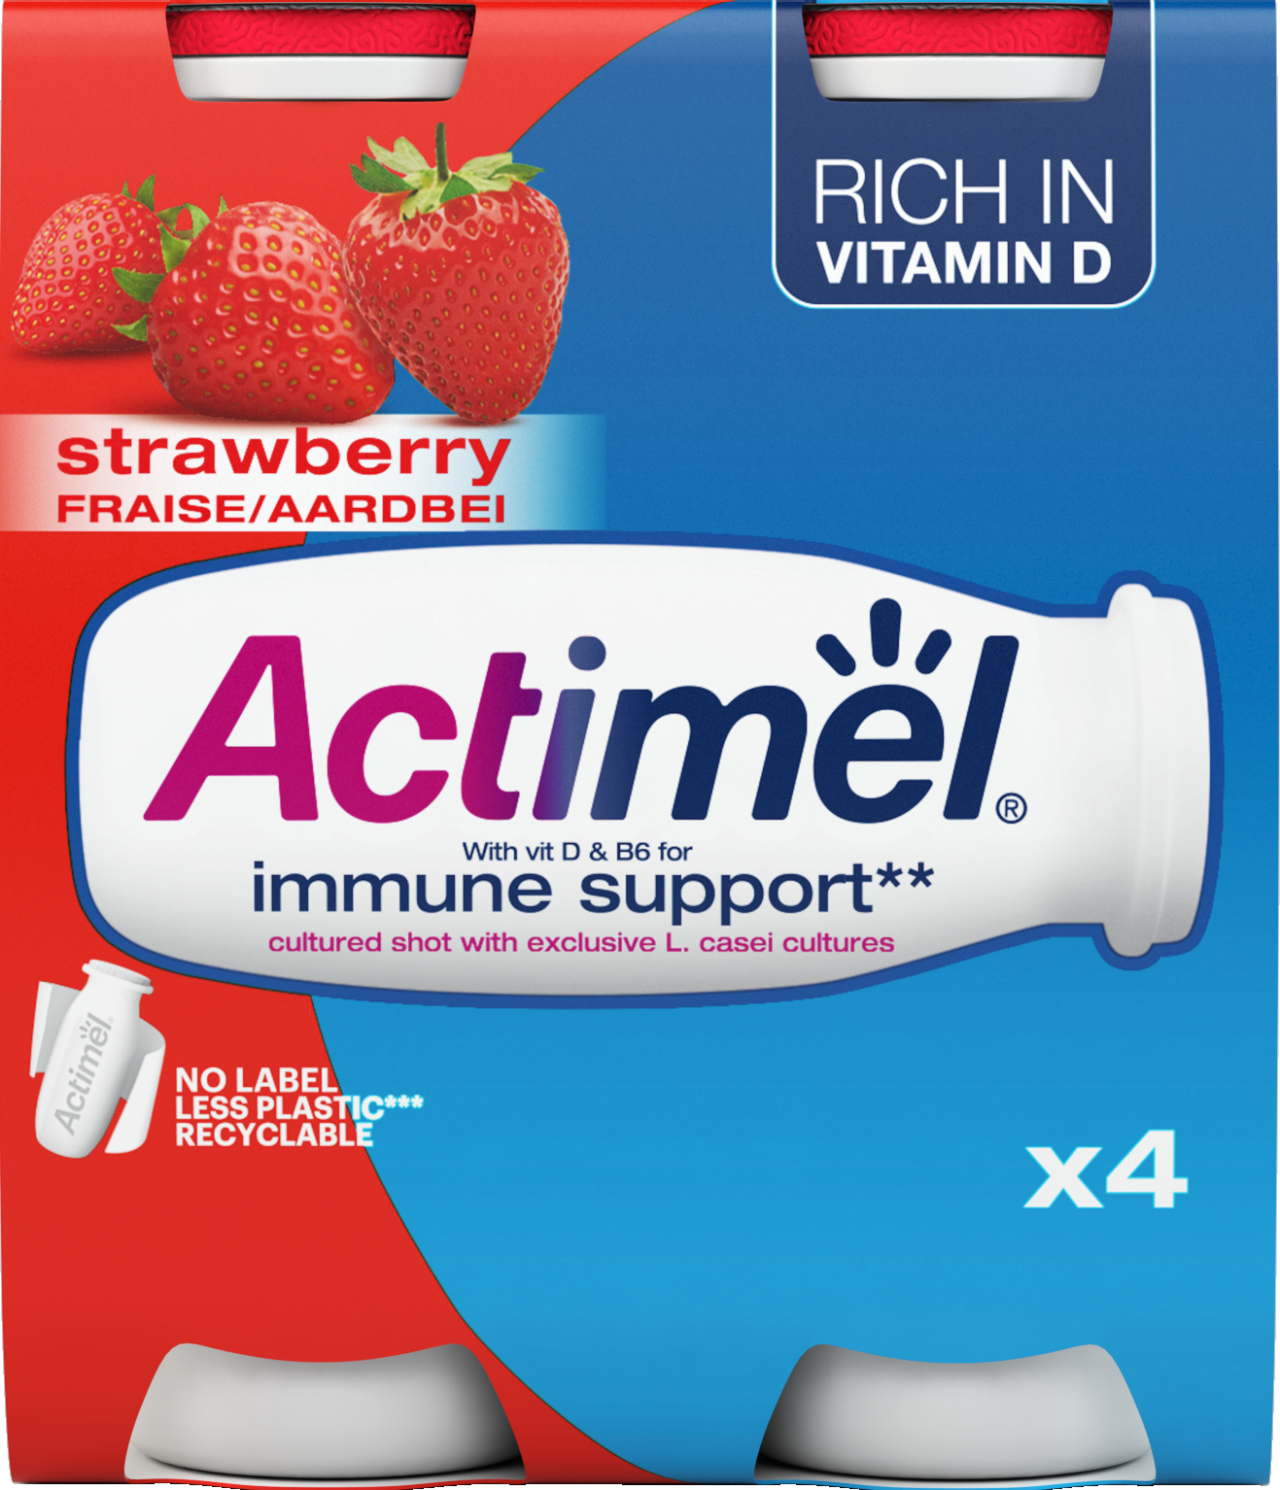 Riga Latvia - Feruary 5, 2018: Actimel is a `probiotic` Yogurt